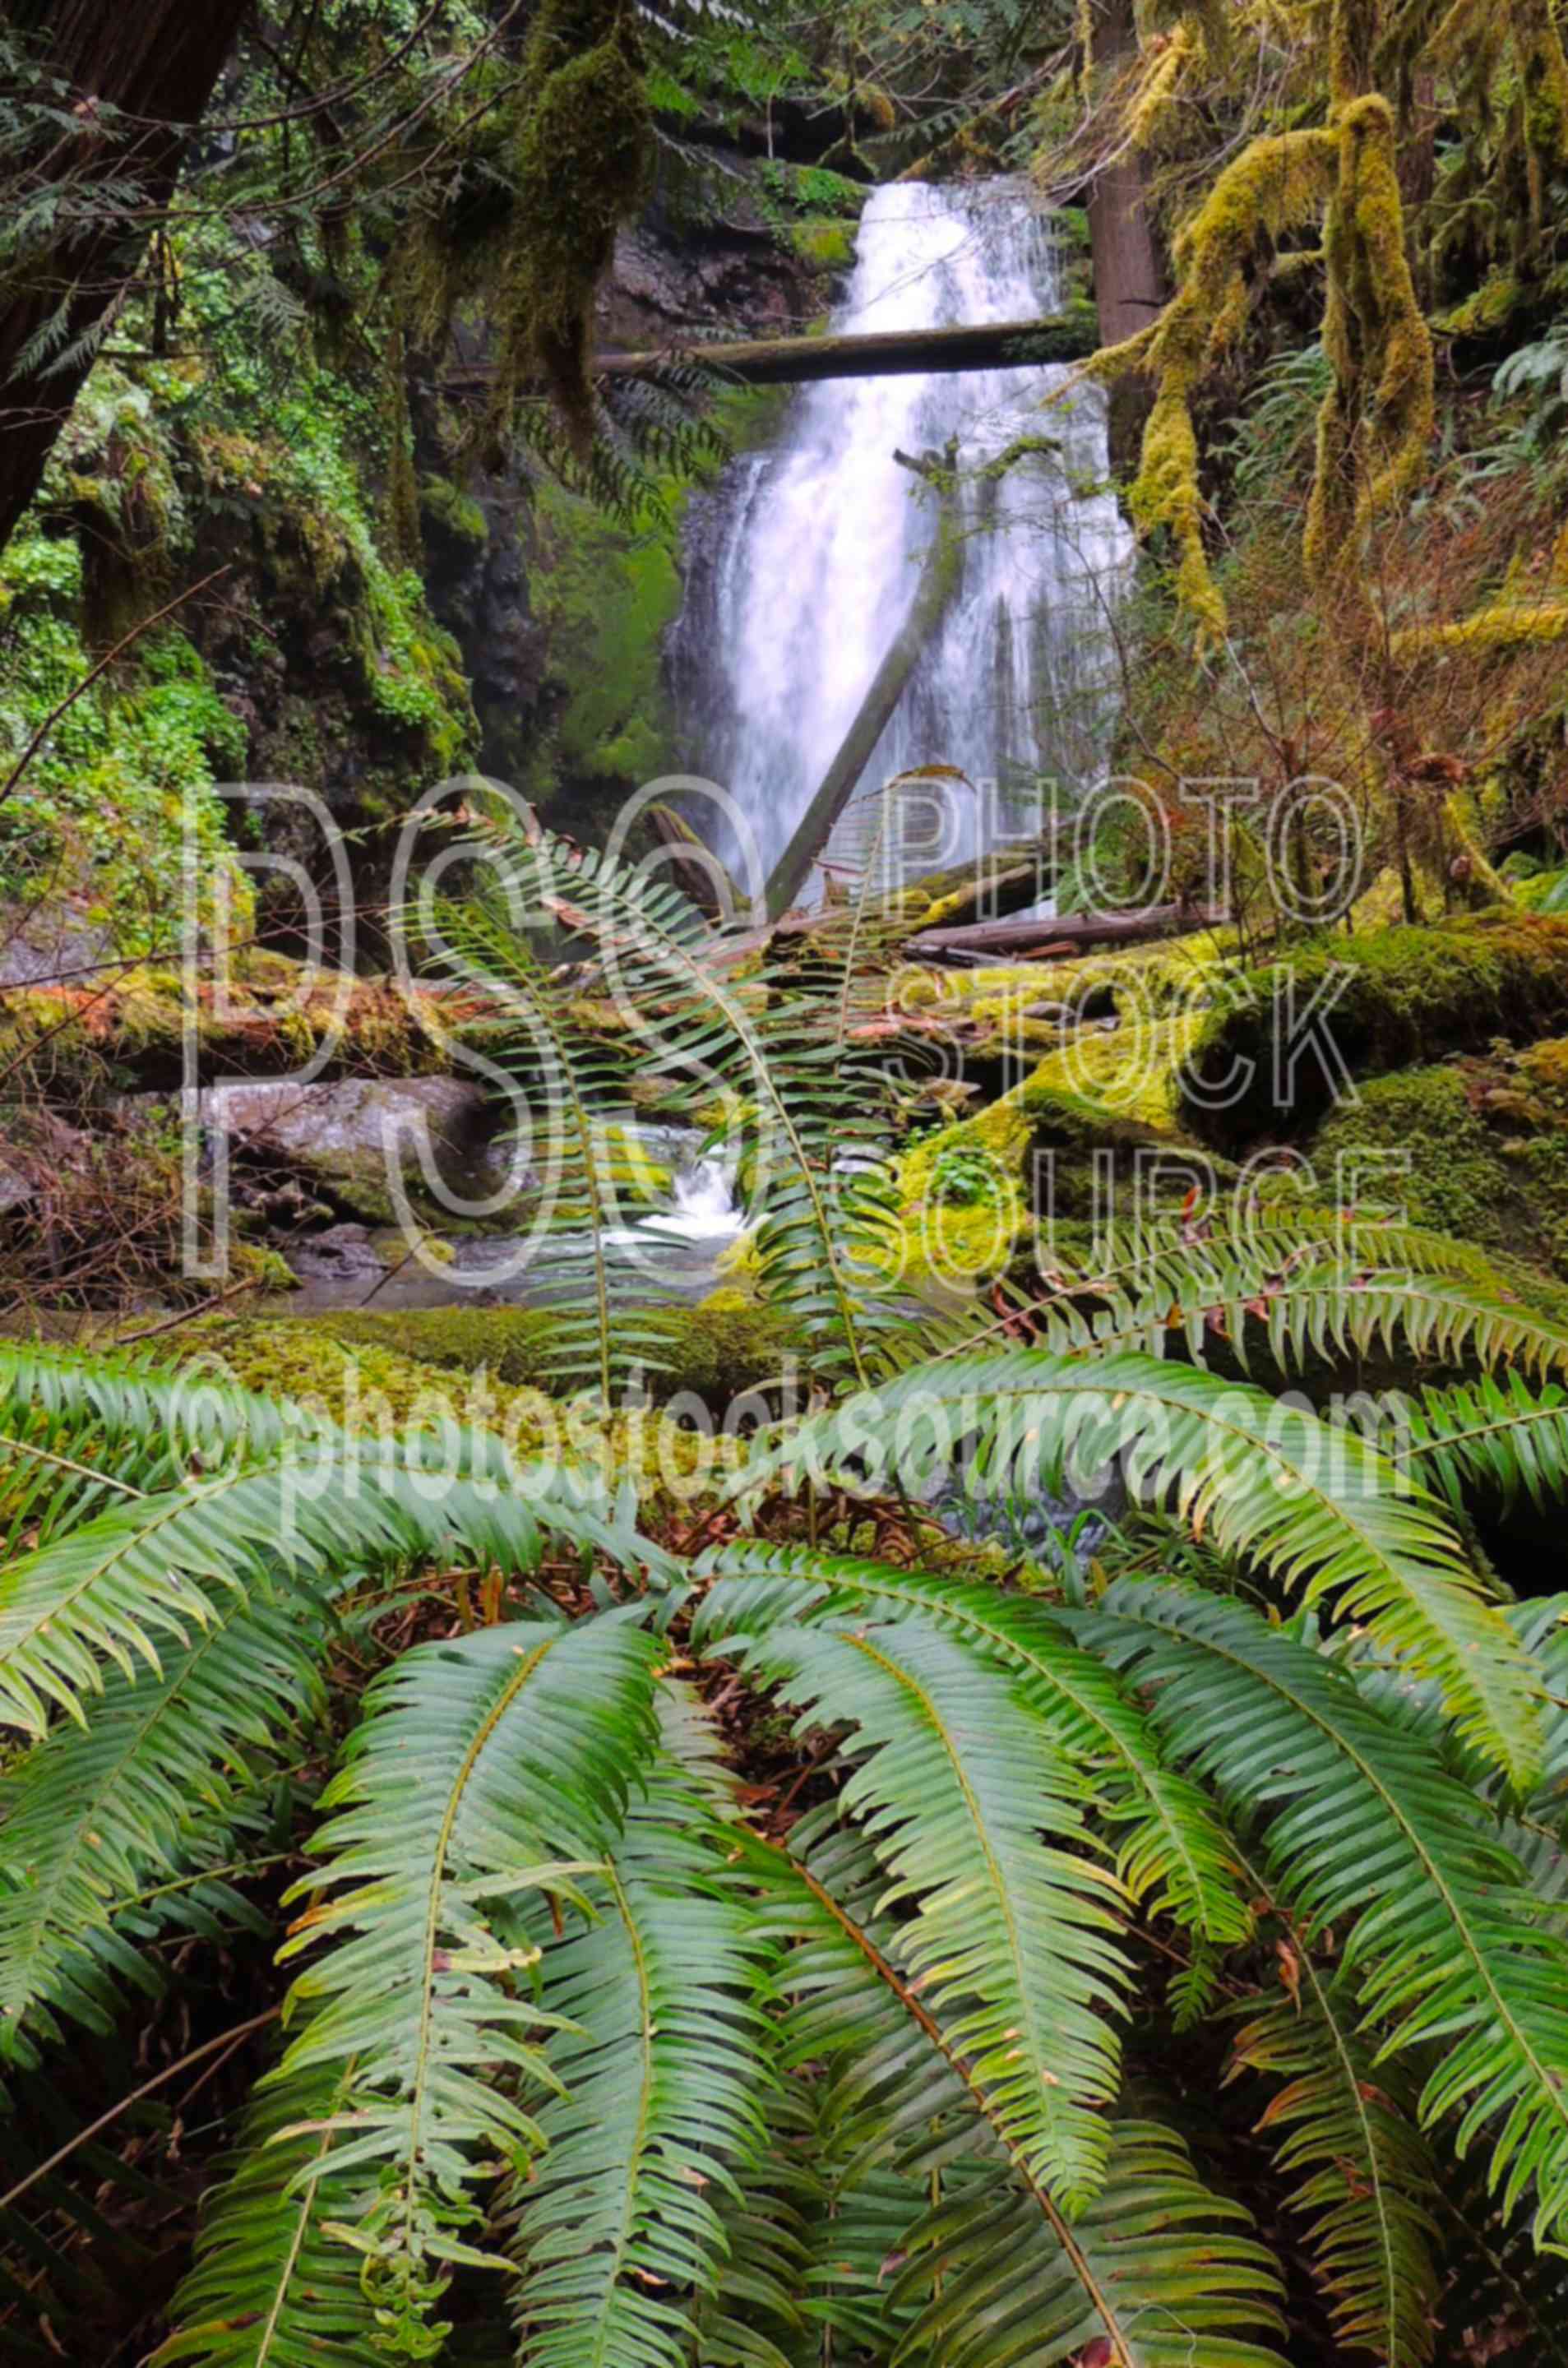 Trestle Creek Falls,waterfall,water,forest,moss,ferns,lush,green,moist,sword fern,polystichum munitum